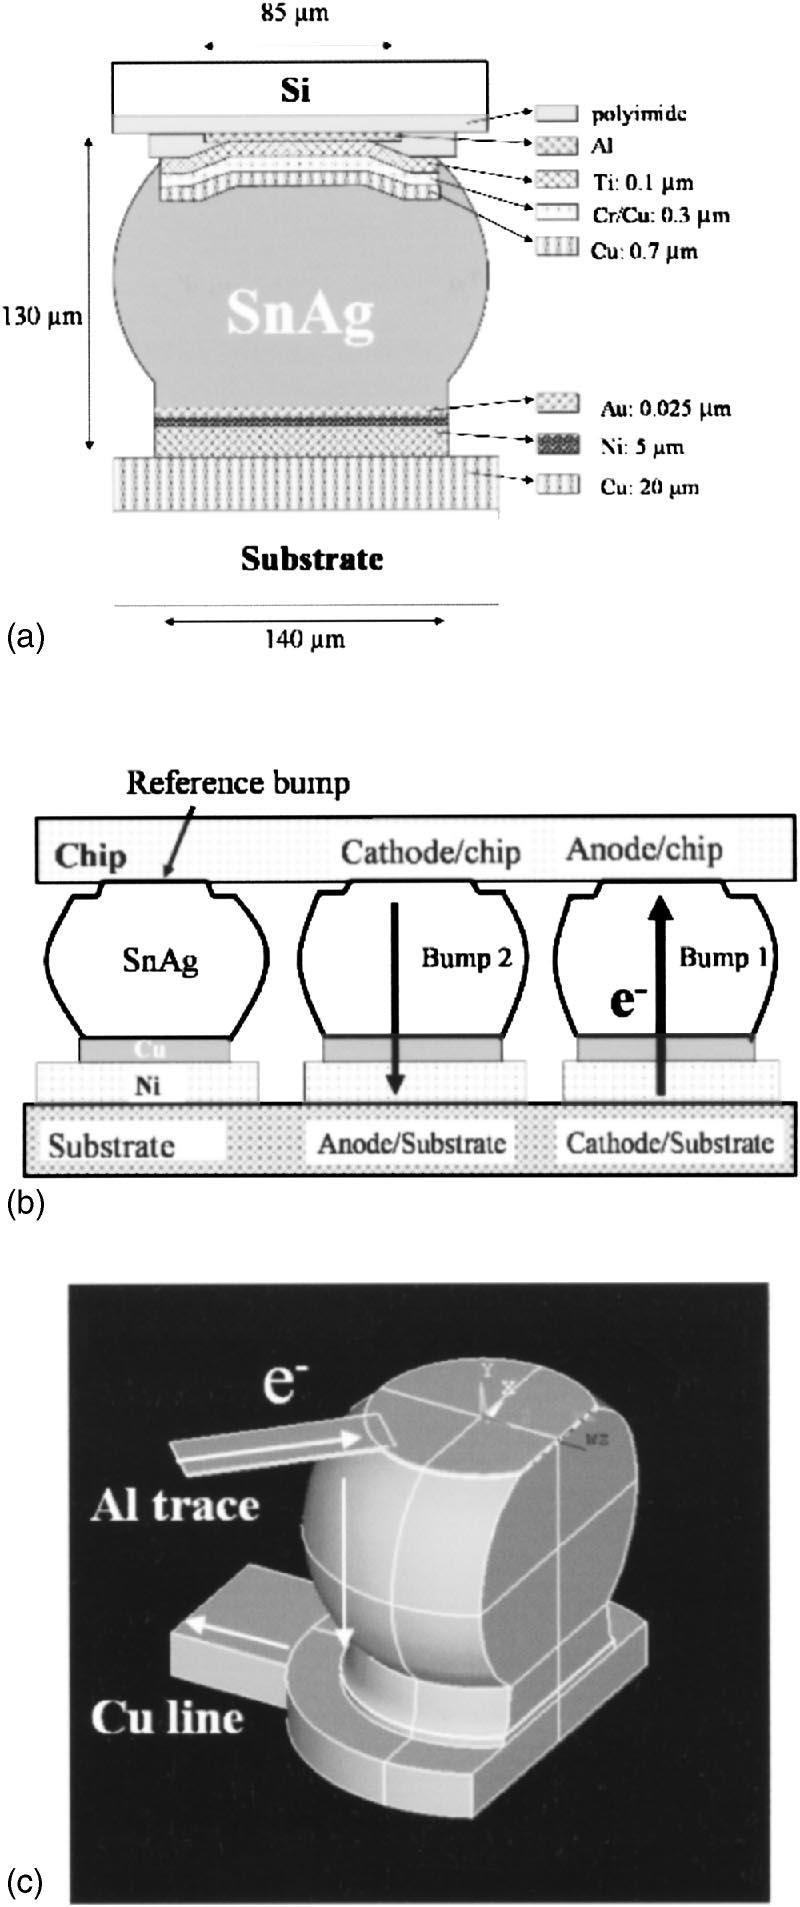 J. Appl. Phys., Vol. 96, No. 8, 15 October 2004 Shao et al. 4519 FIG. 2. (a) Cross-sectional SEM image of an as-prepared SnAg solder bump.